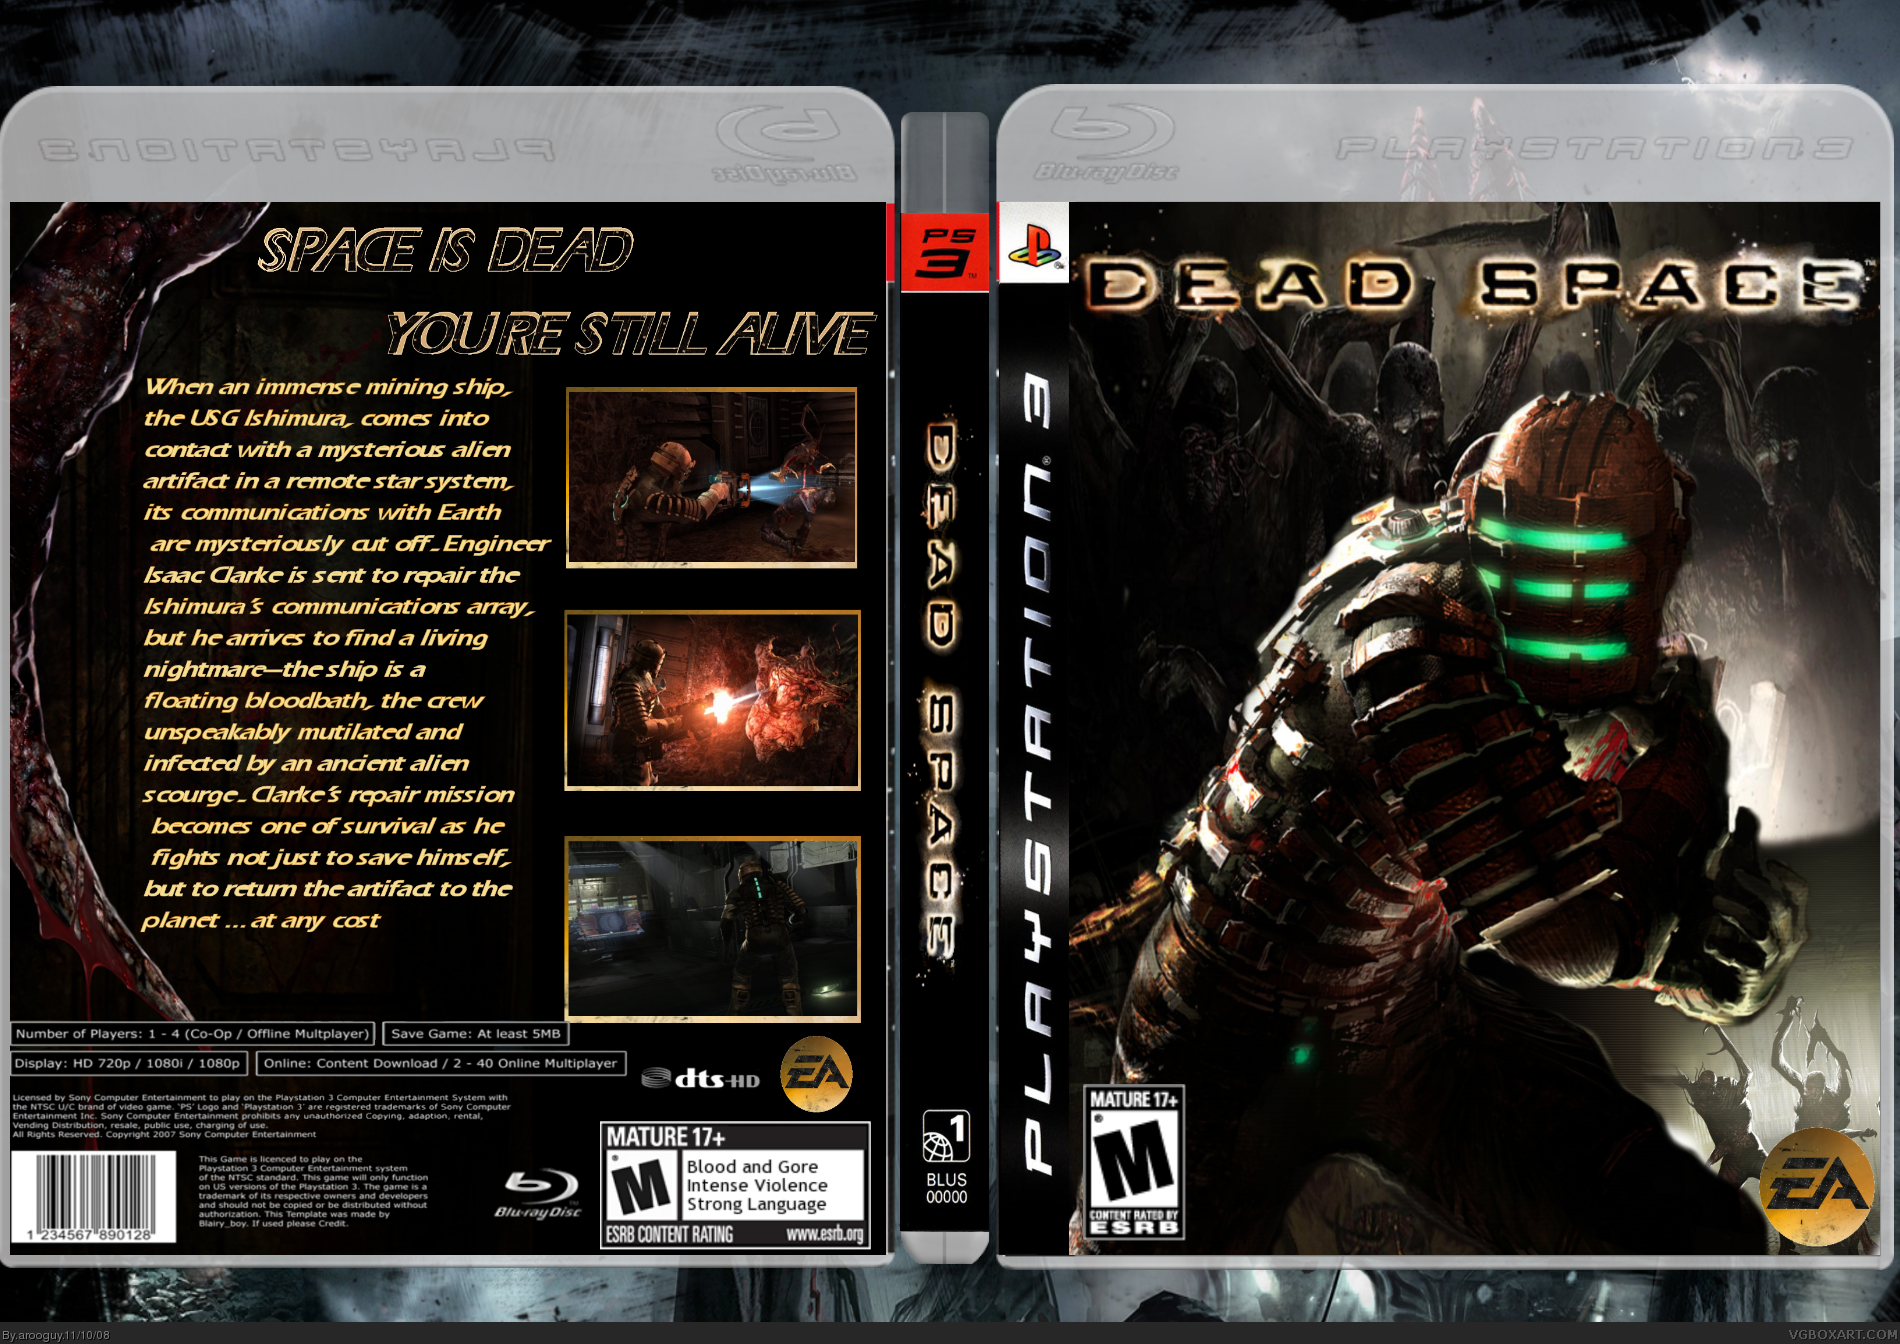 Диск ПС 3 дед Спейс. Dead Space 3 Фаргус. Dead Space диск ps5. Dead Space ps3 Cover.